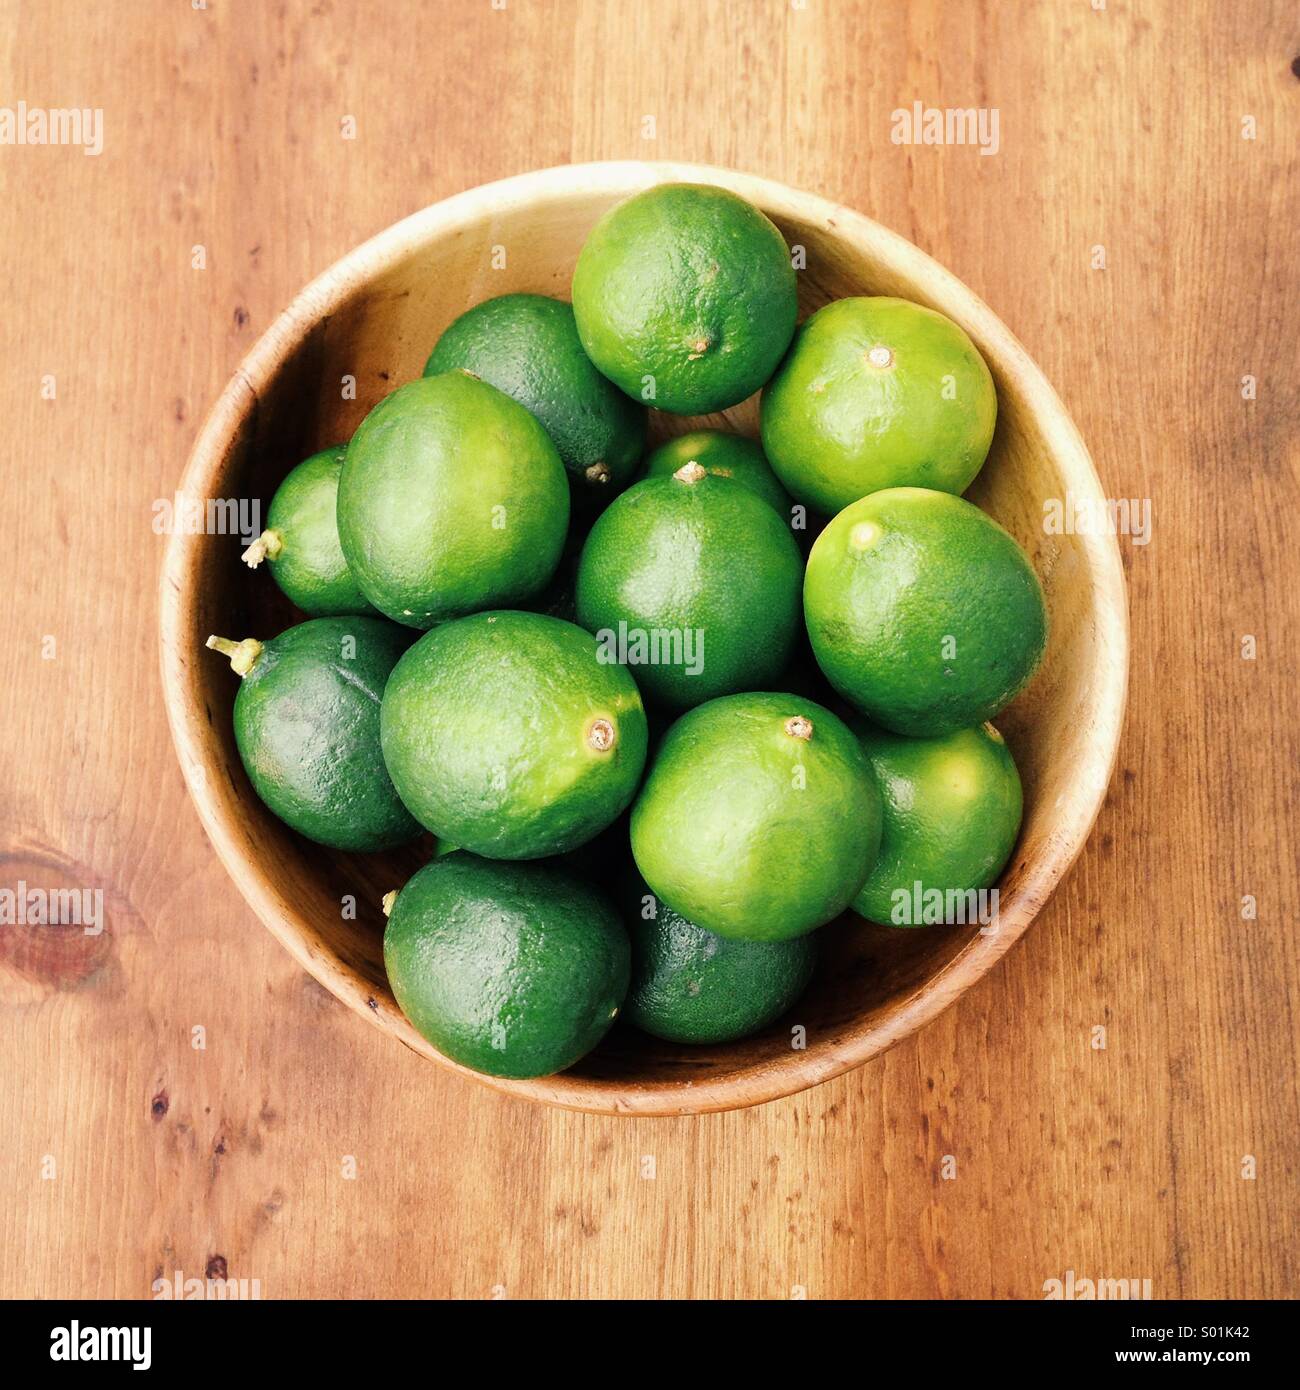 Key limes Stock Photo